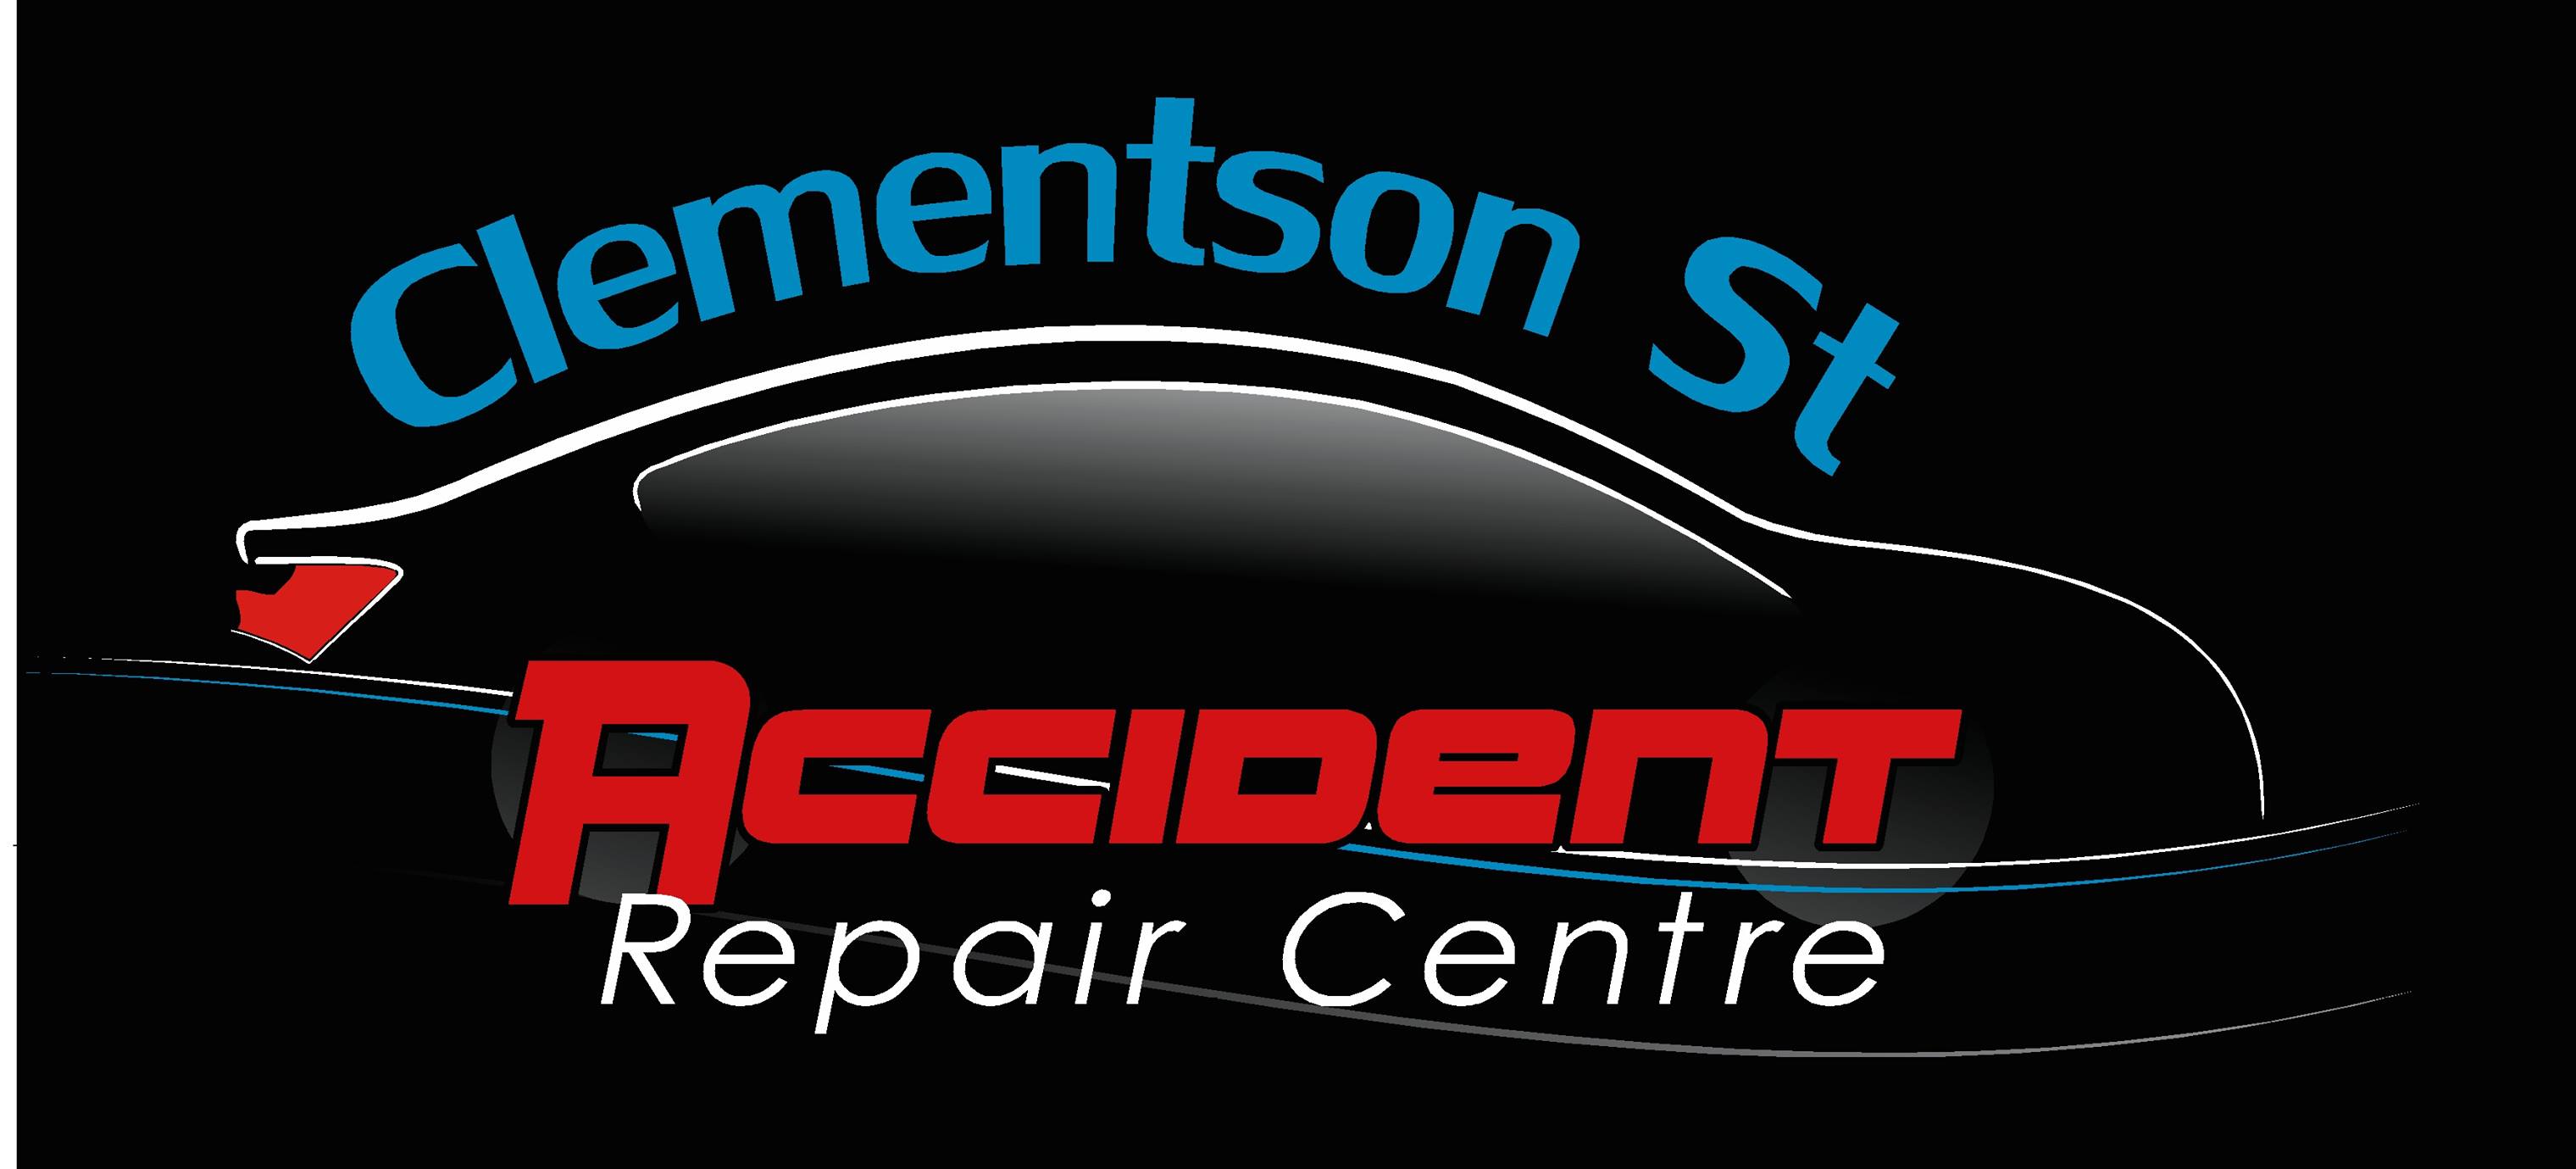 Clementson Street Accident Repair Centre Logo